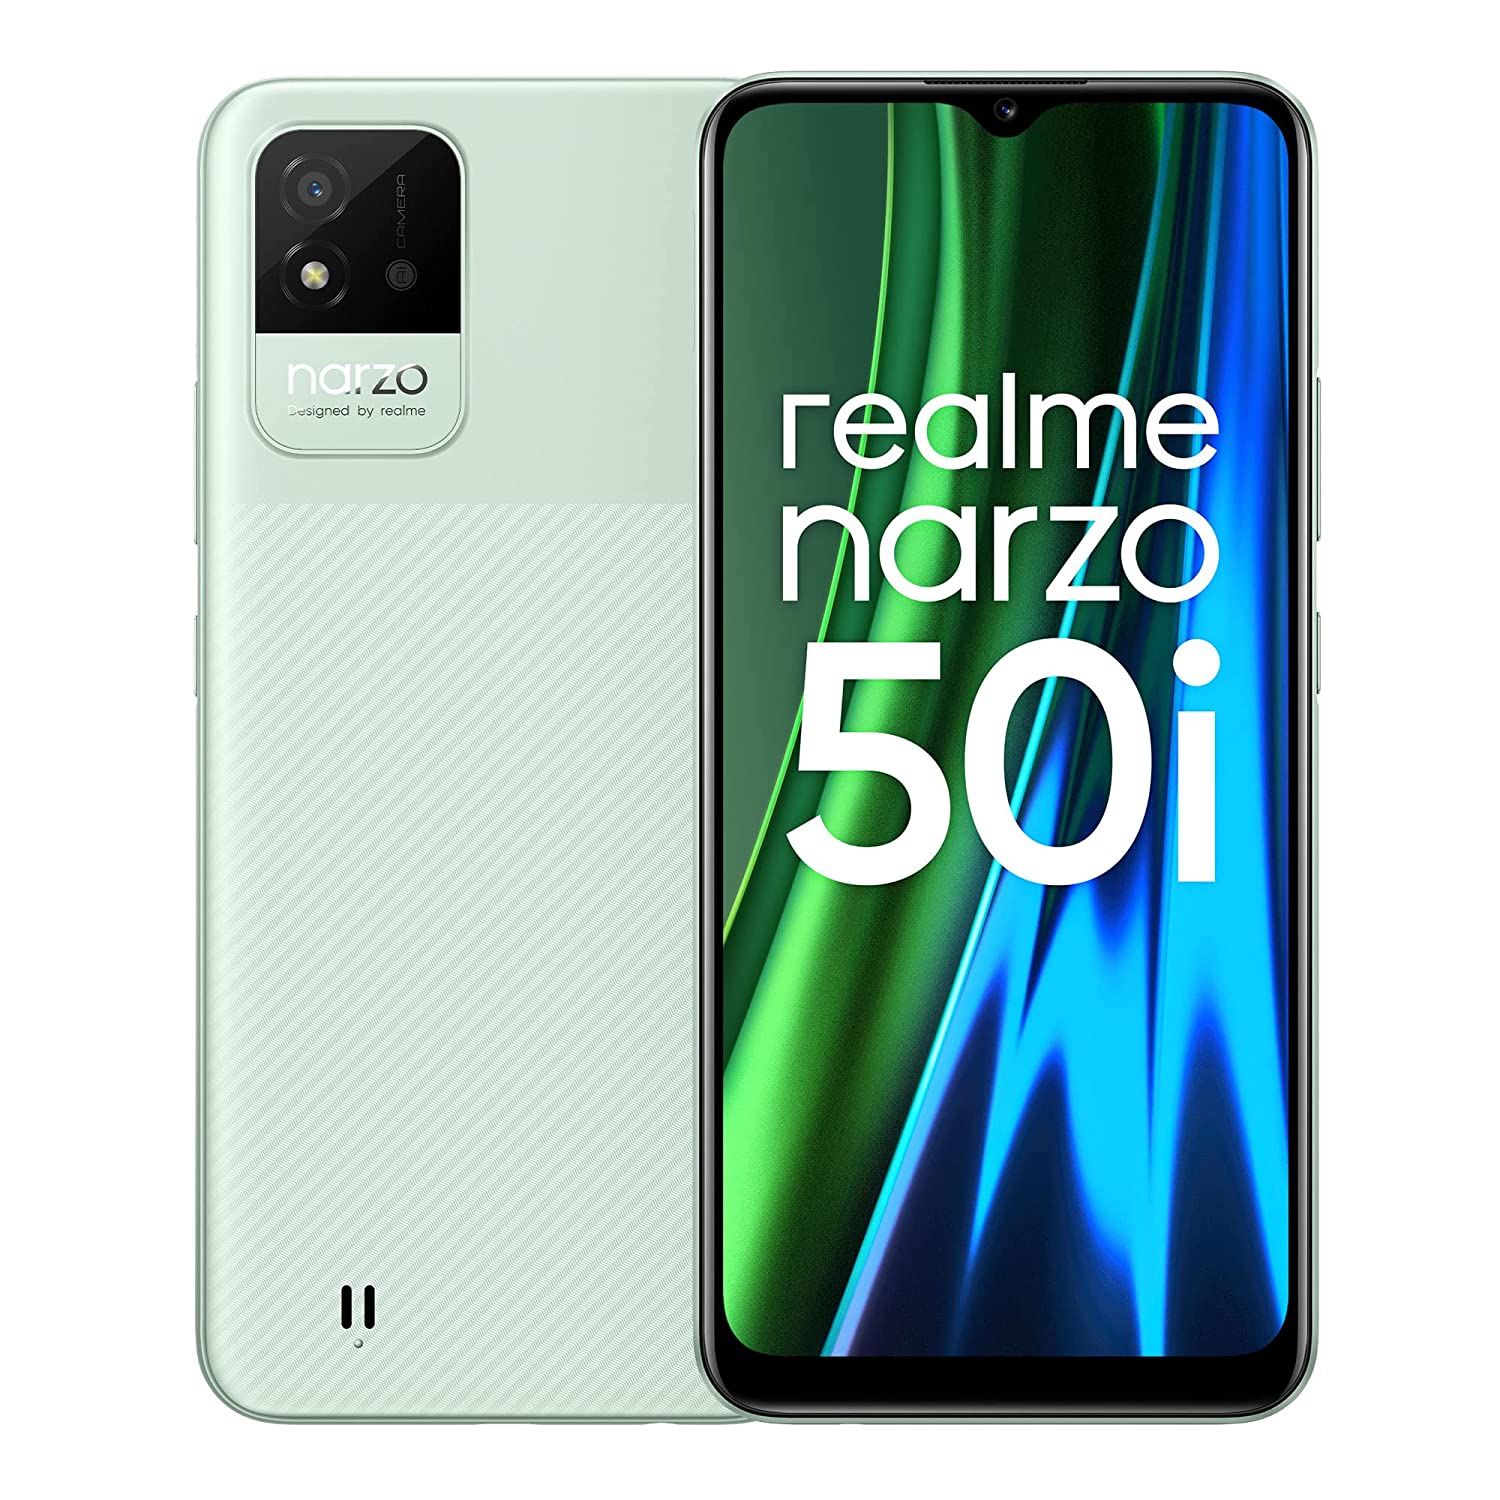 realme-narzo-50i-mobile-phones